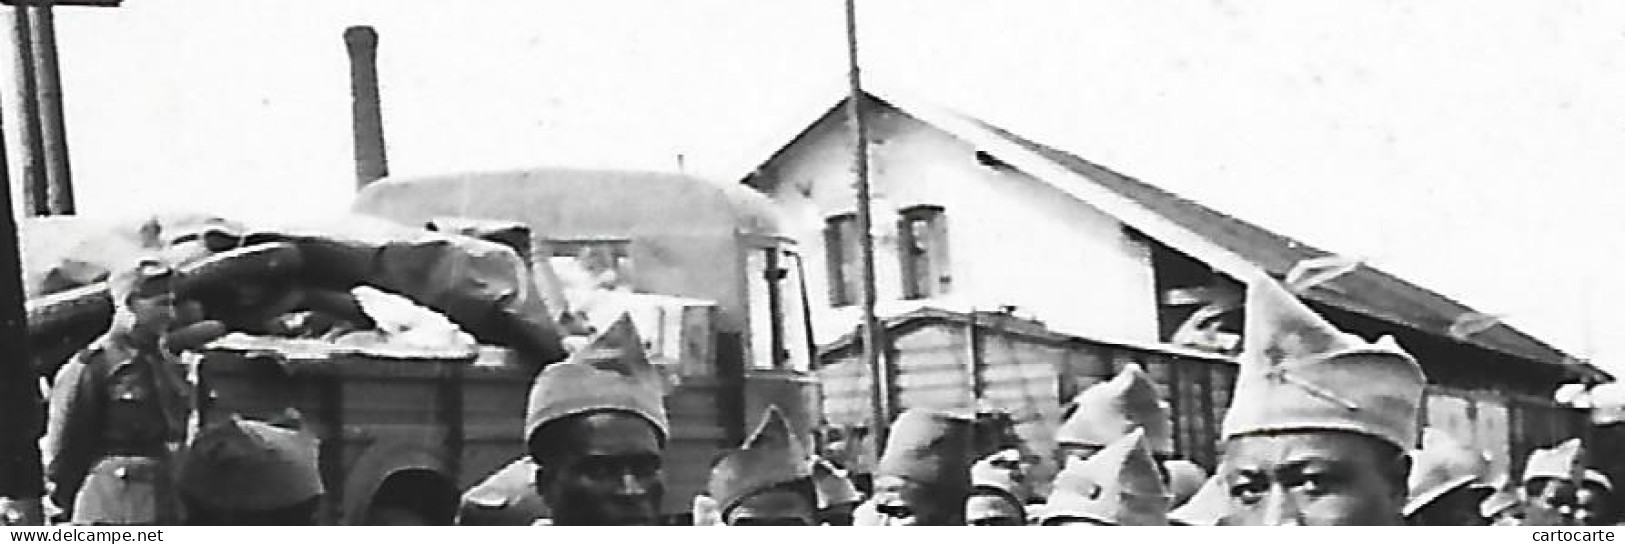 17 144 0424 WW2 WK2 ROYAN ENVIRONS  A SITUER GARE  PRISONNIERS AFICAINS  SOLDATS ALLEMANDS 1940 - Oorlog, Militair